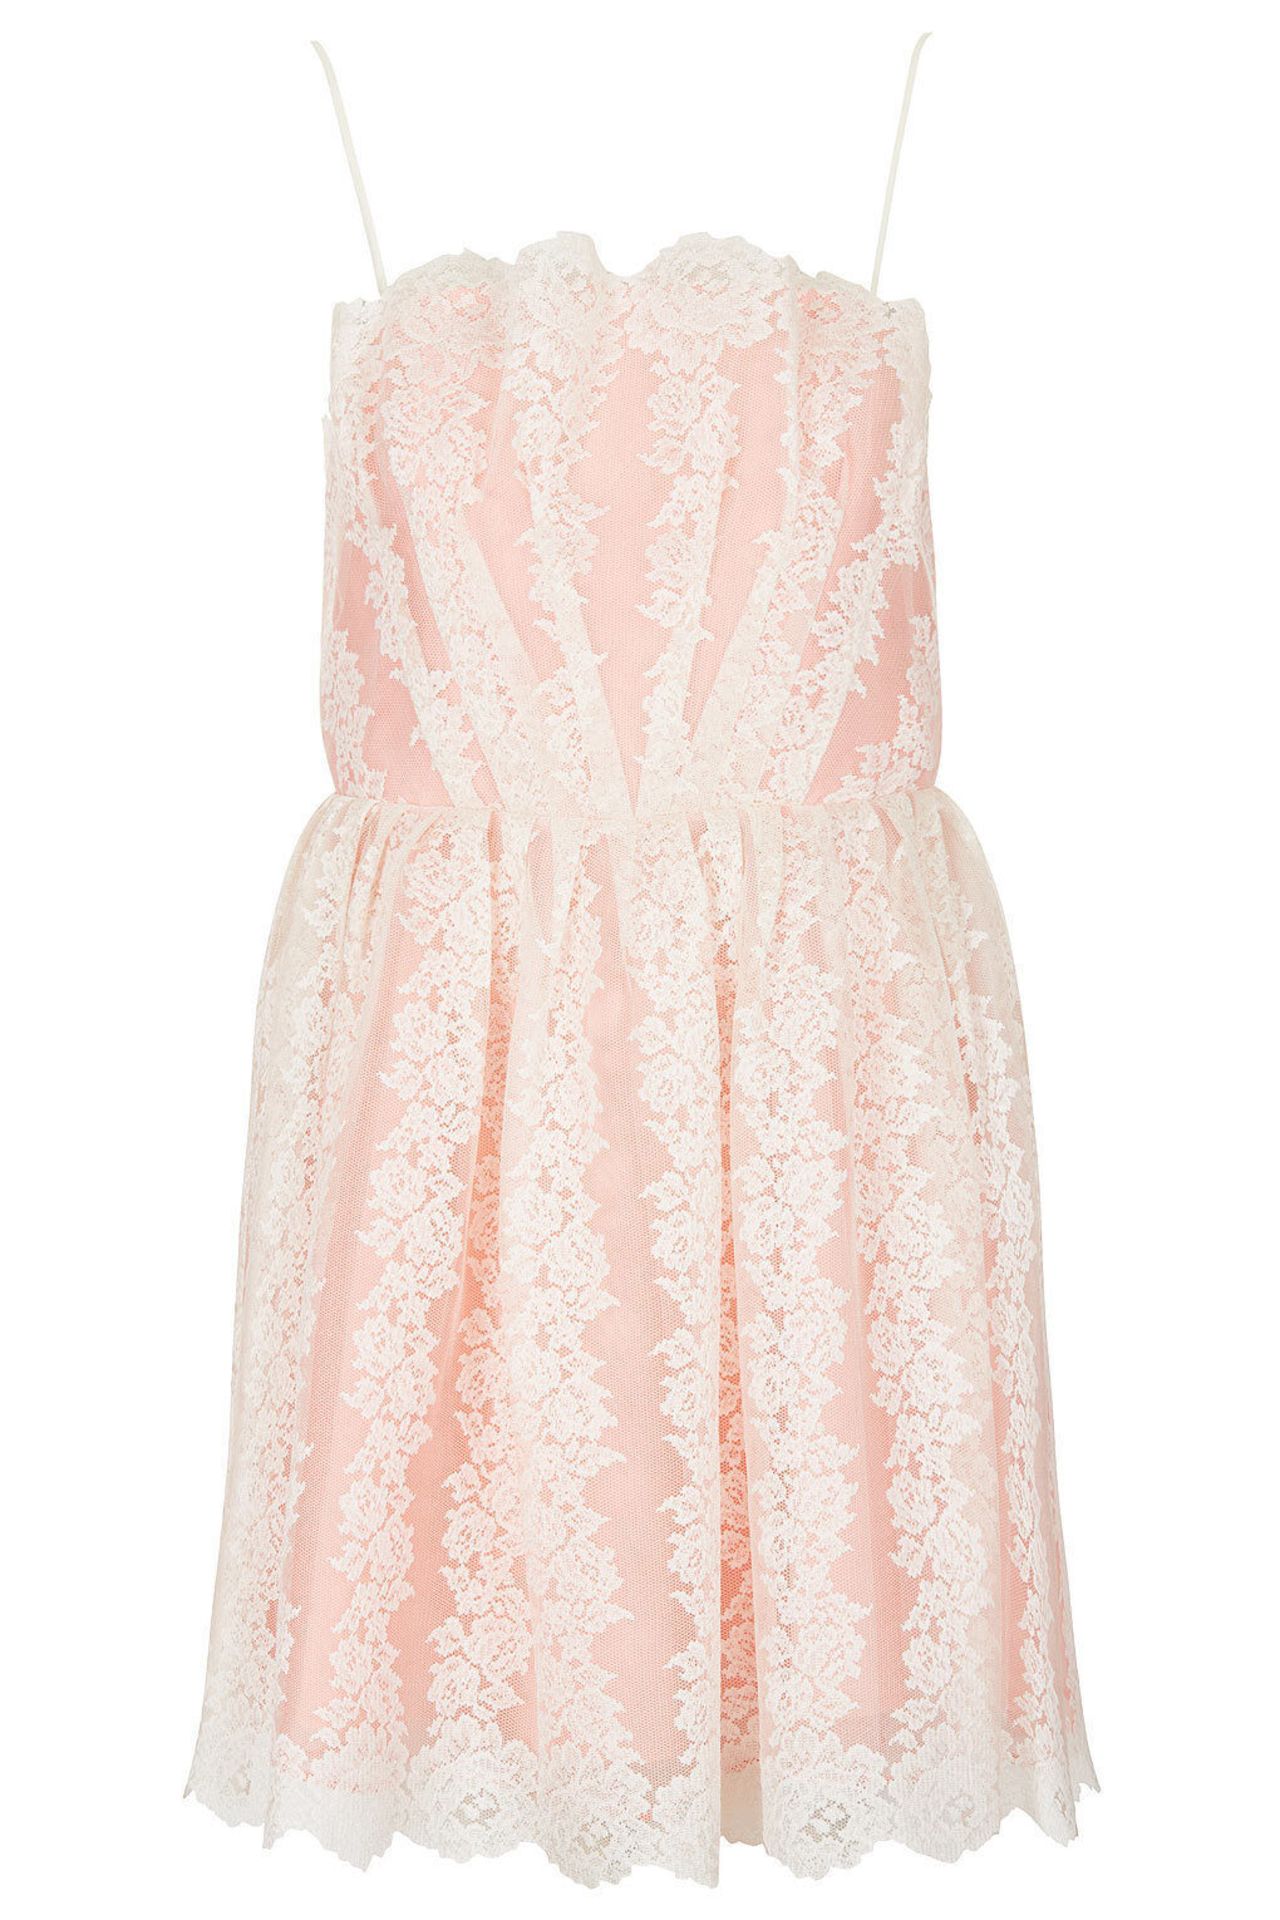 Liquidation Stock: New Ladies Lace Embellished Dress x 10 RRP £500